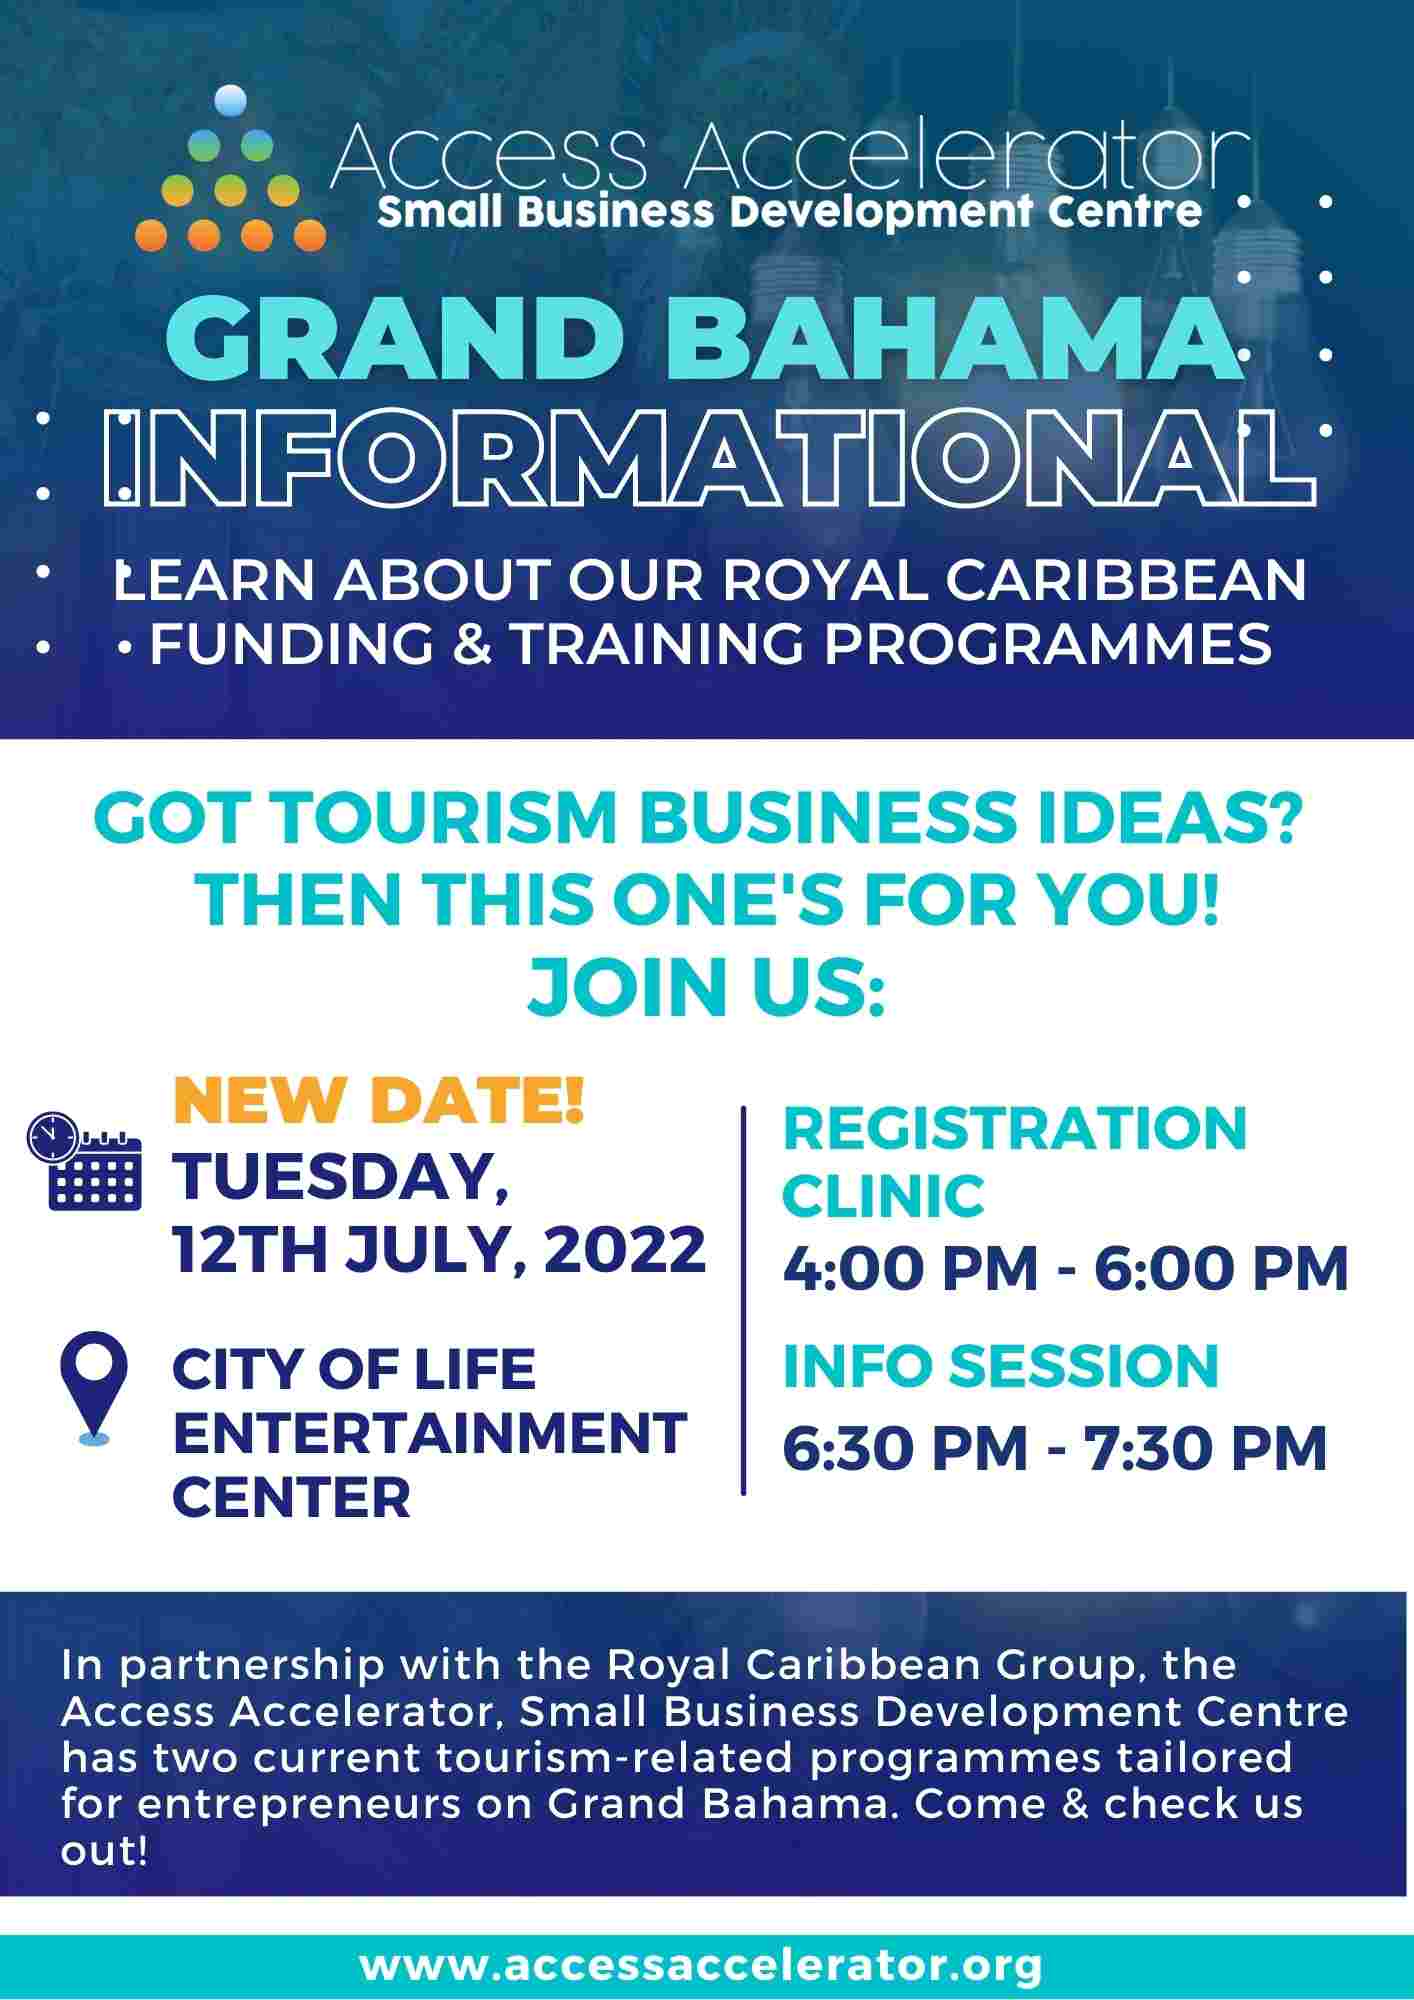 Royal Caribbean Funding & Training Programmes Informational: Grand Bahama graphic flier